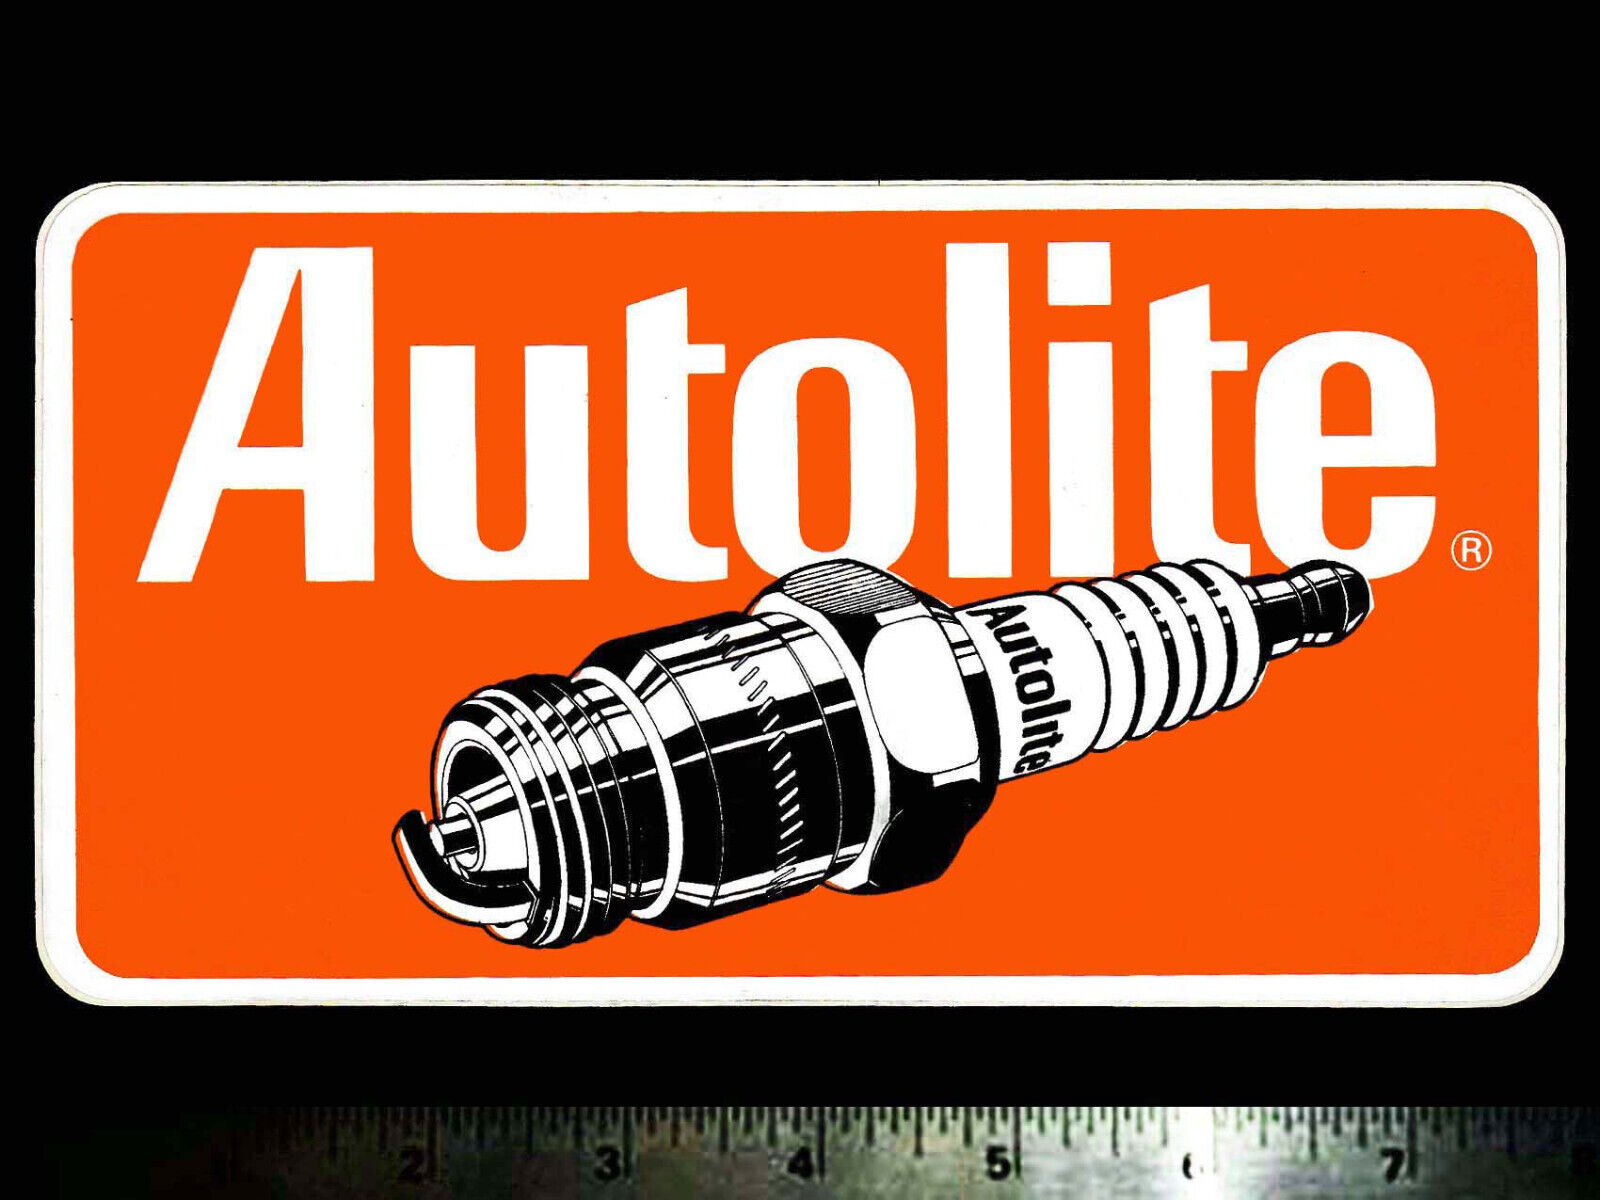 AUTOLITE Spark Plugs - Original Vintage 1970's 80's Racing Decal/Sticker FORD A